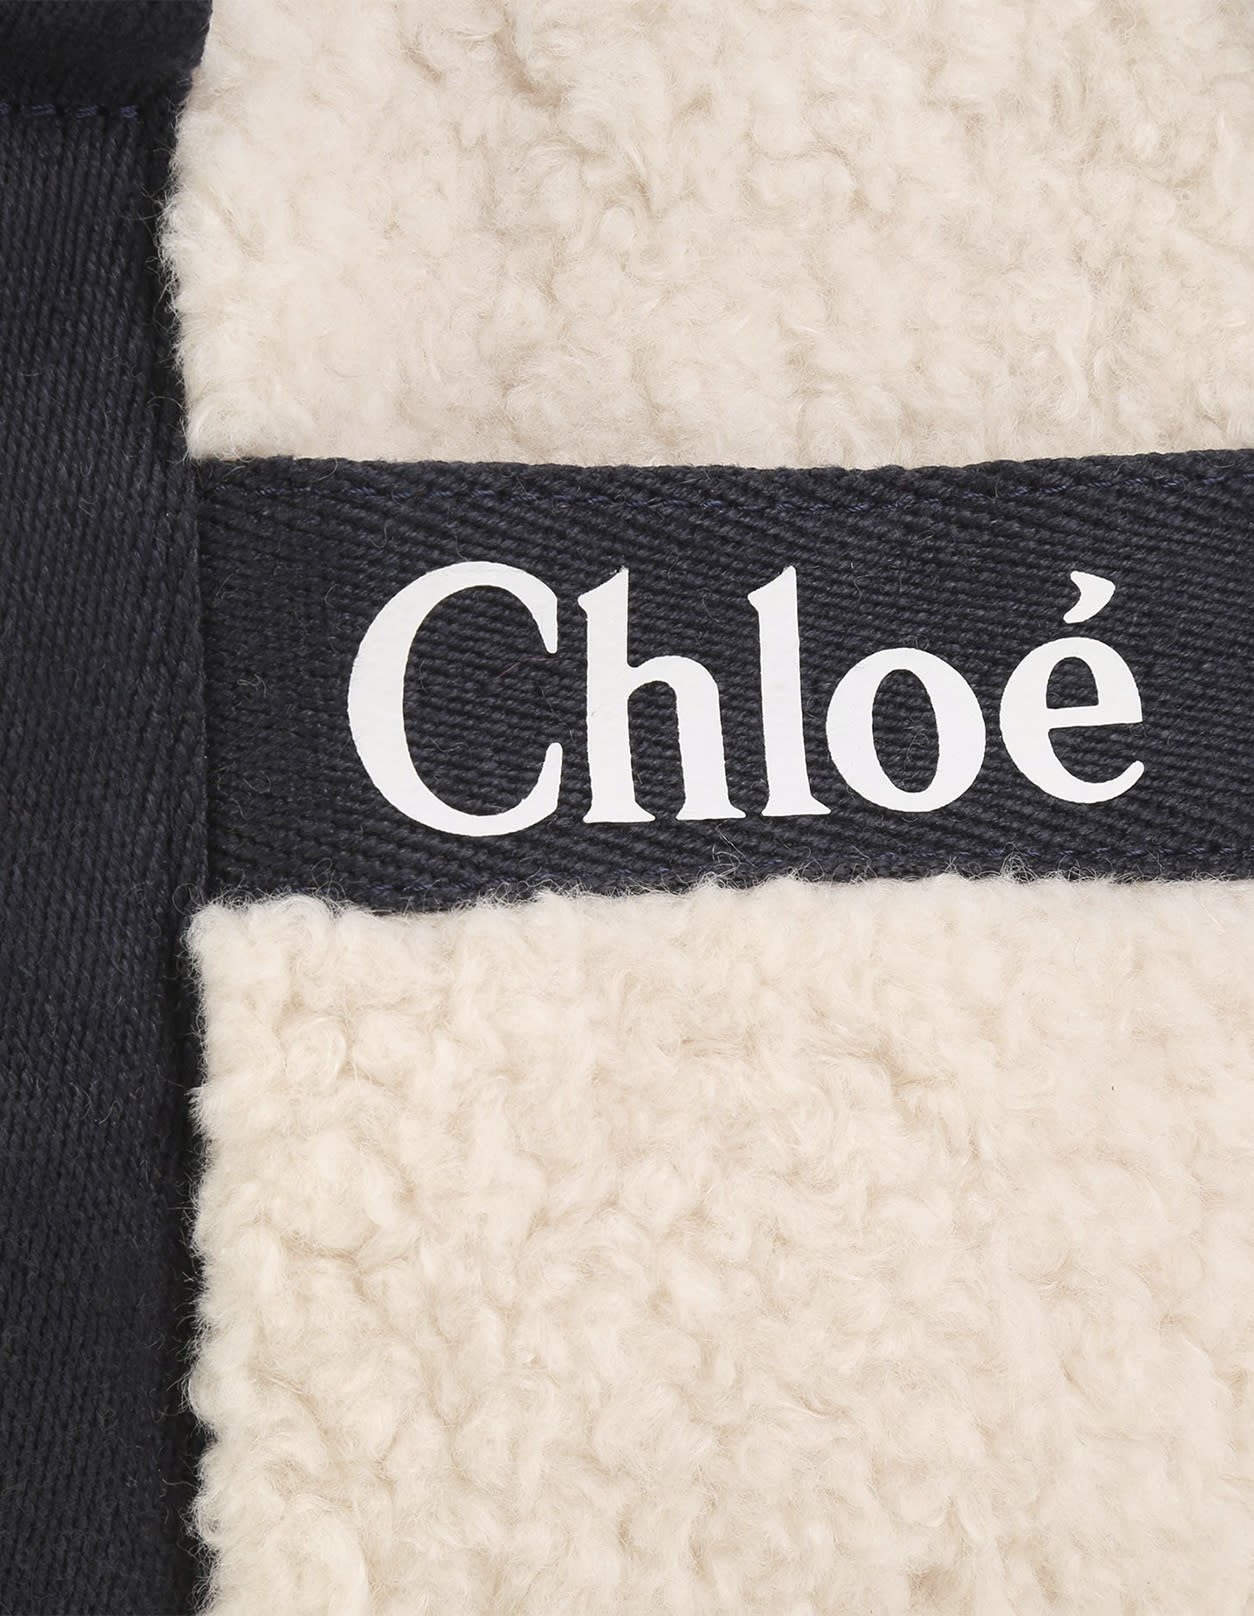 Chloé 'Chloé C' shoulder bag, StclaircomoShops